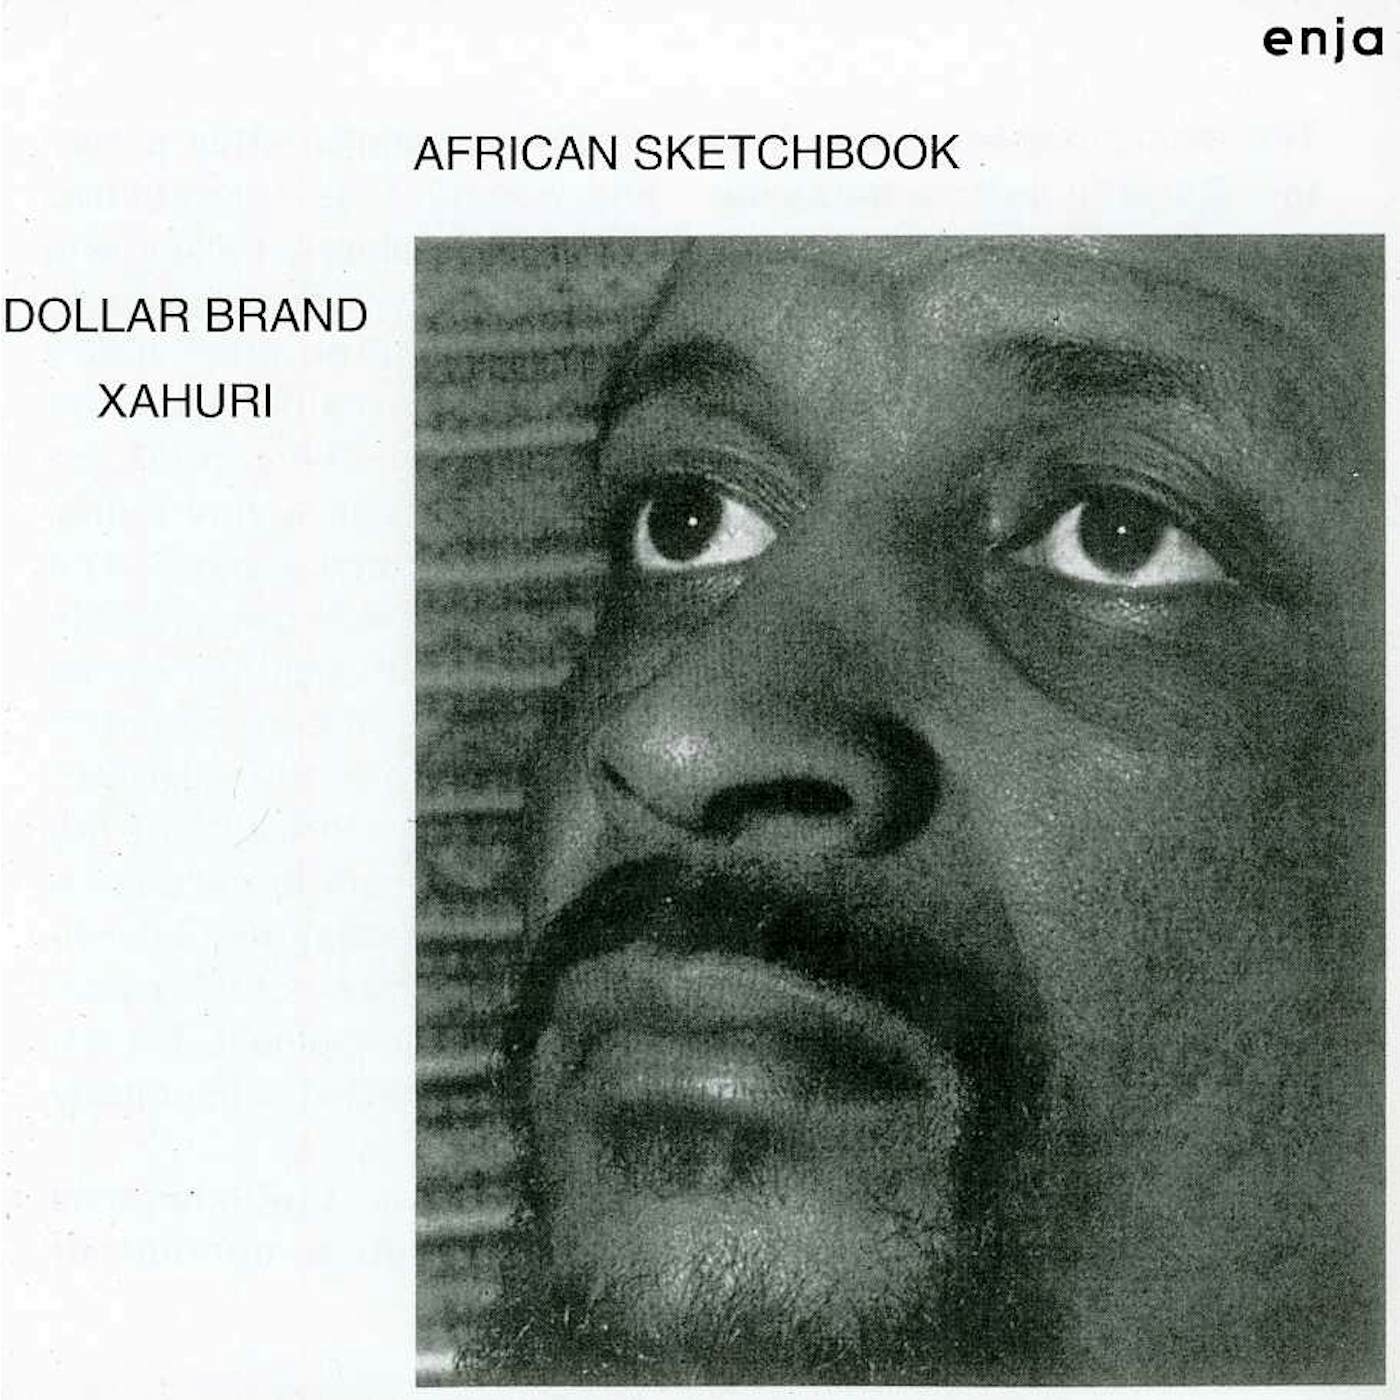 Dollar Brand AFRICAN SKECHBOOK CD